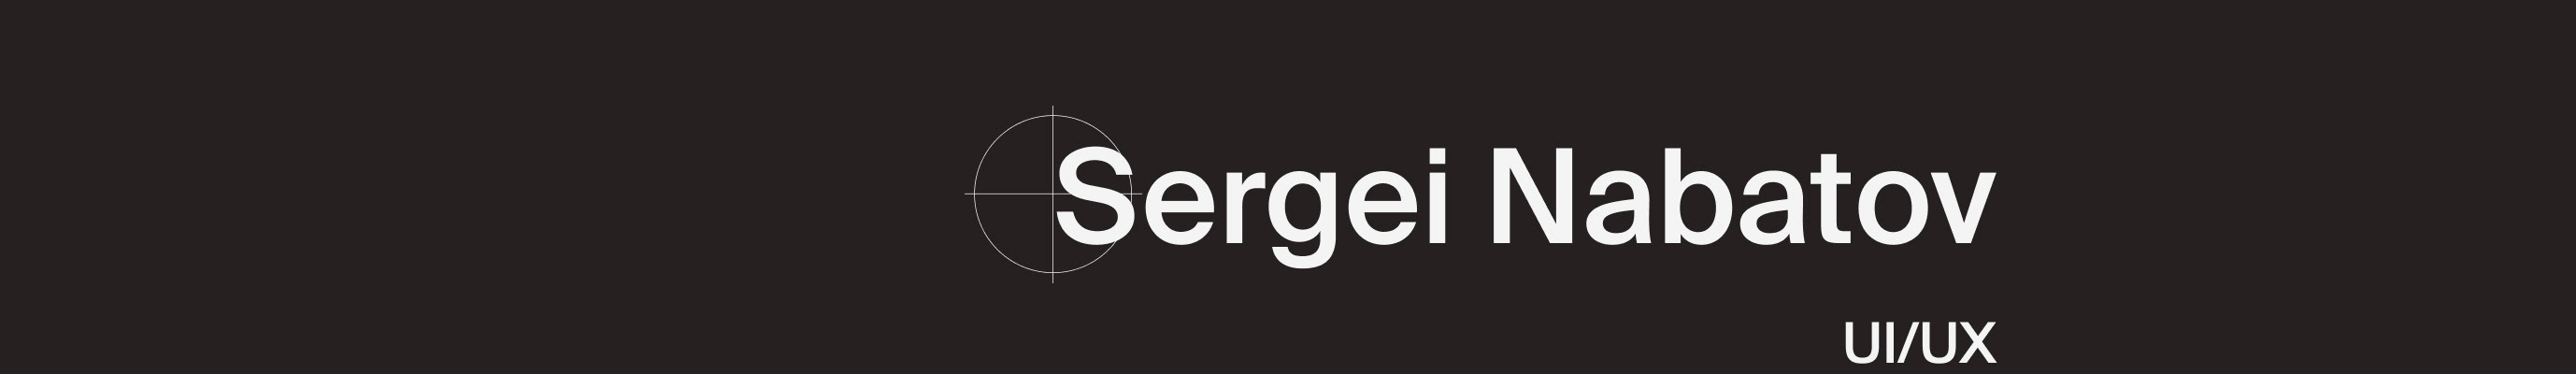 Sergei Nabatov's profile banner